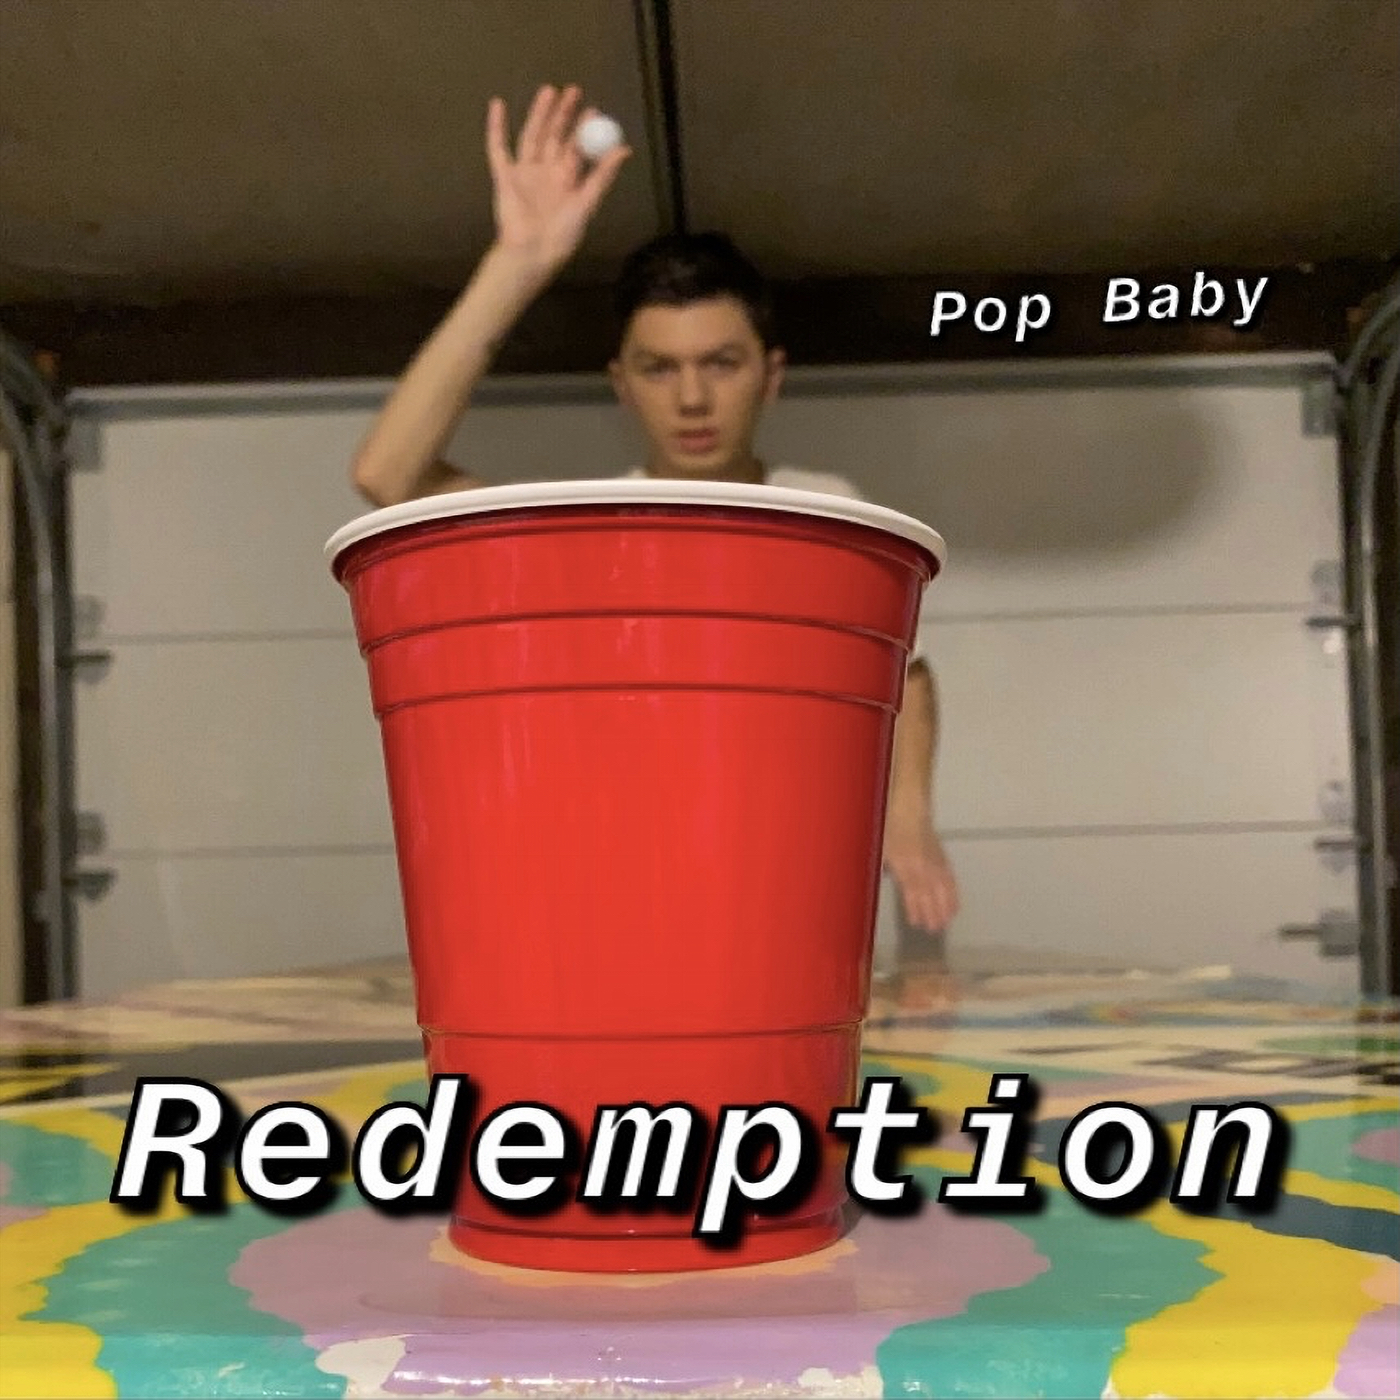 POP PREMIERE: POP BABY stuns fans with incredible new album ‘Redemption’.